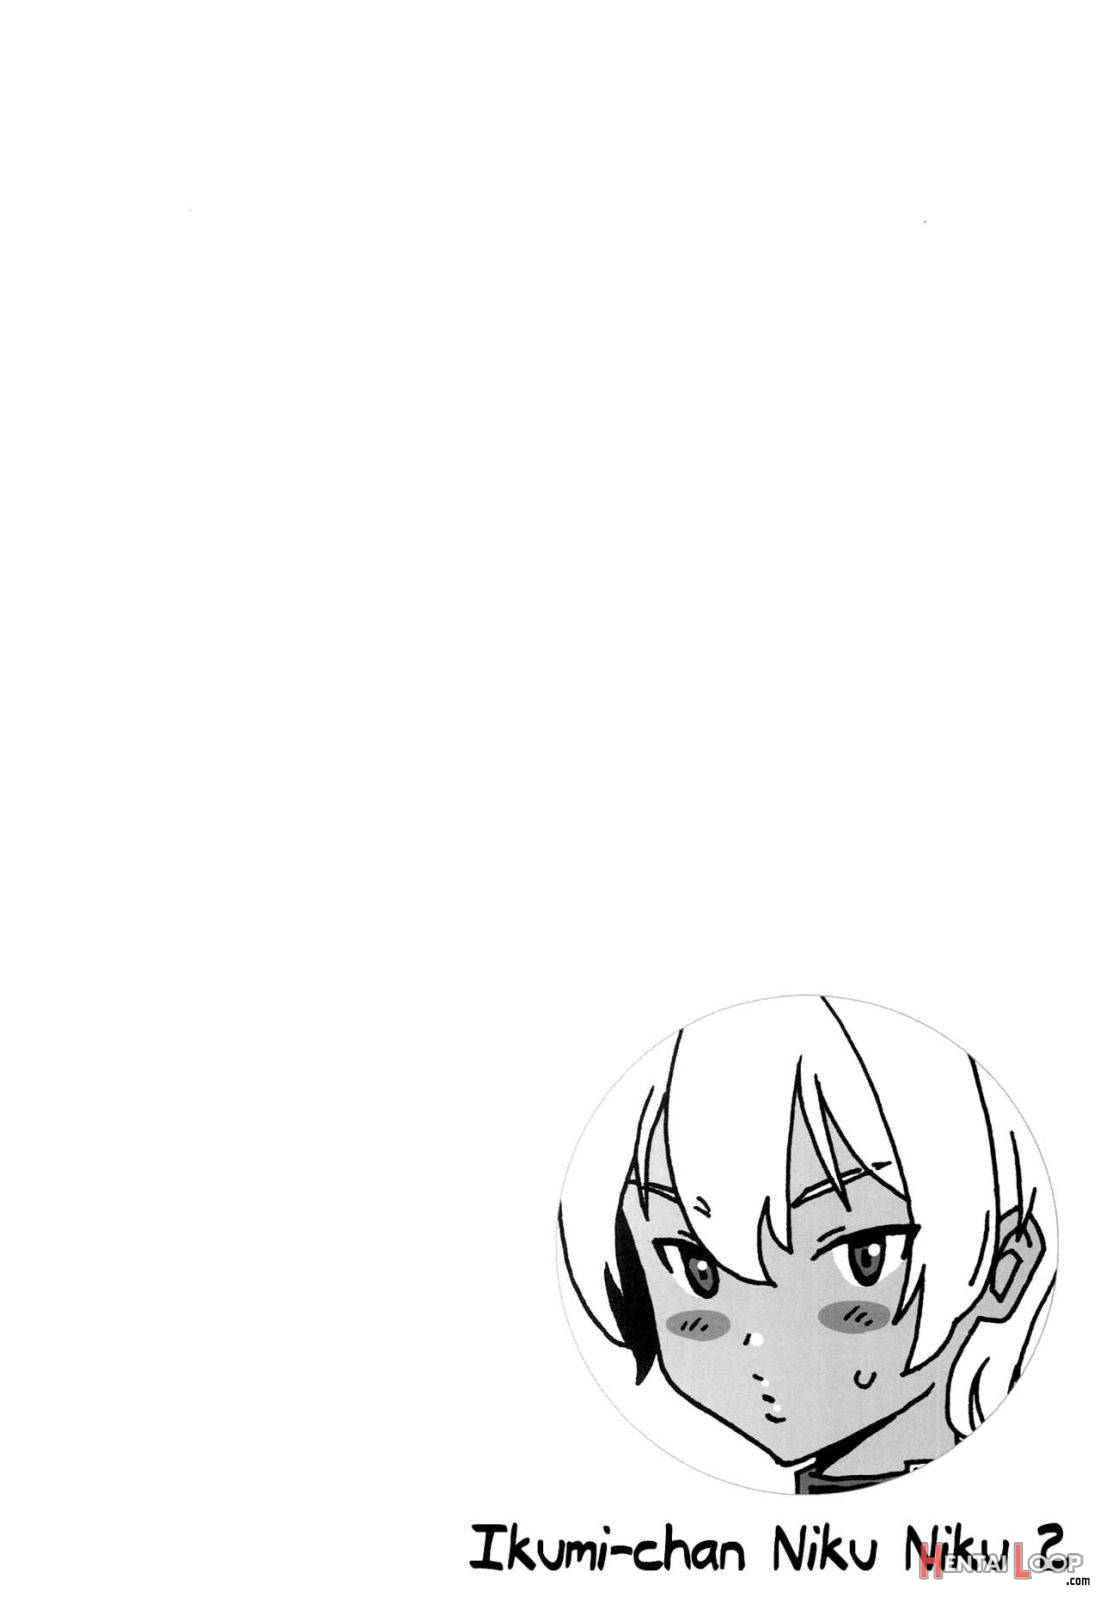 Ikumi-chan Niku Niku 2 page 3